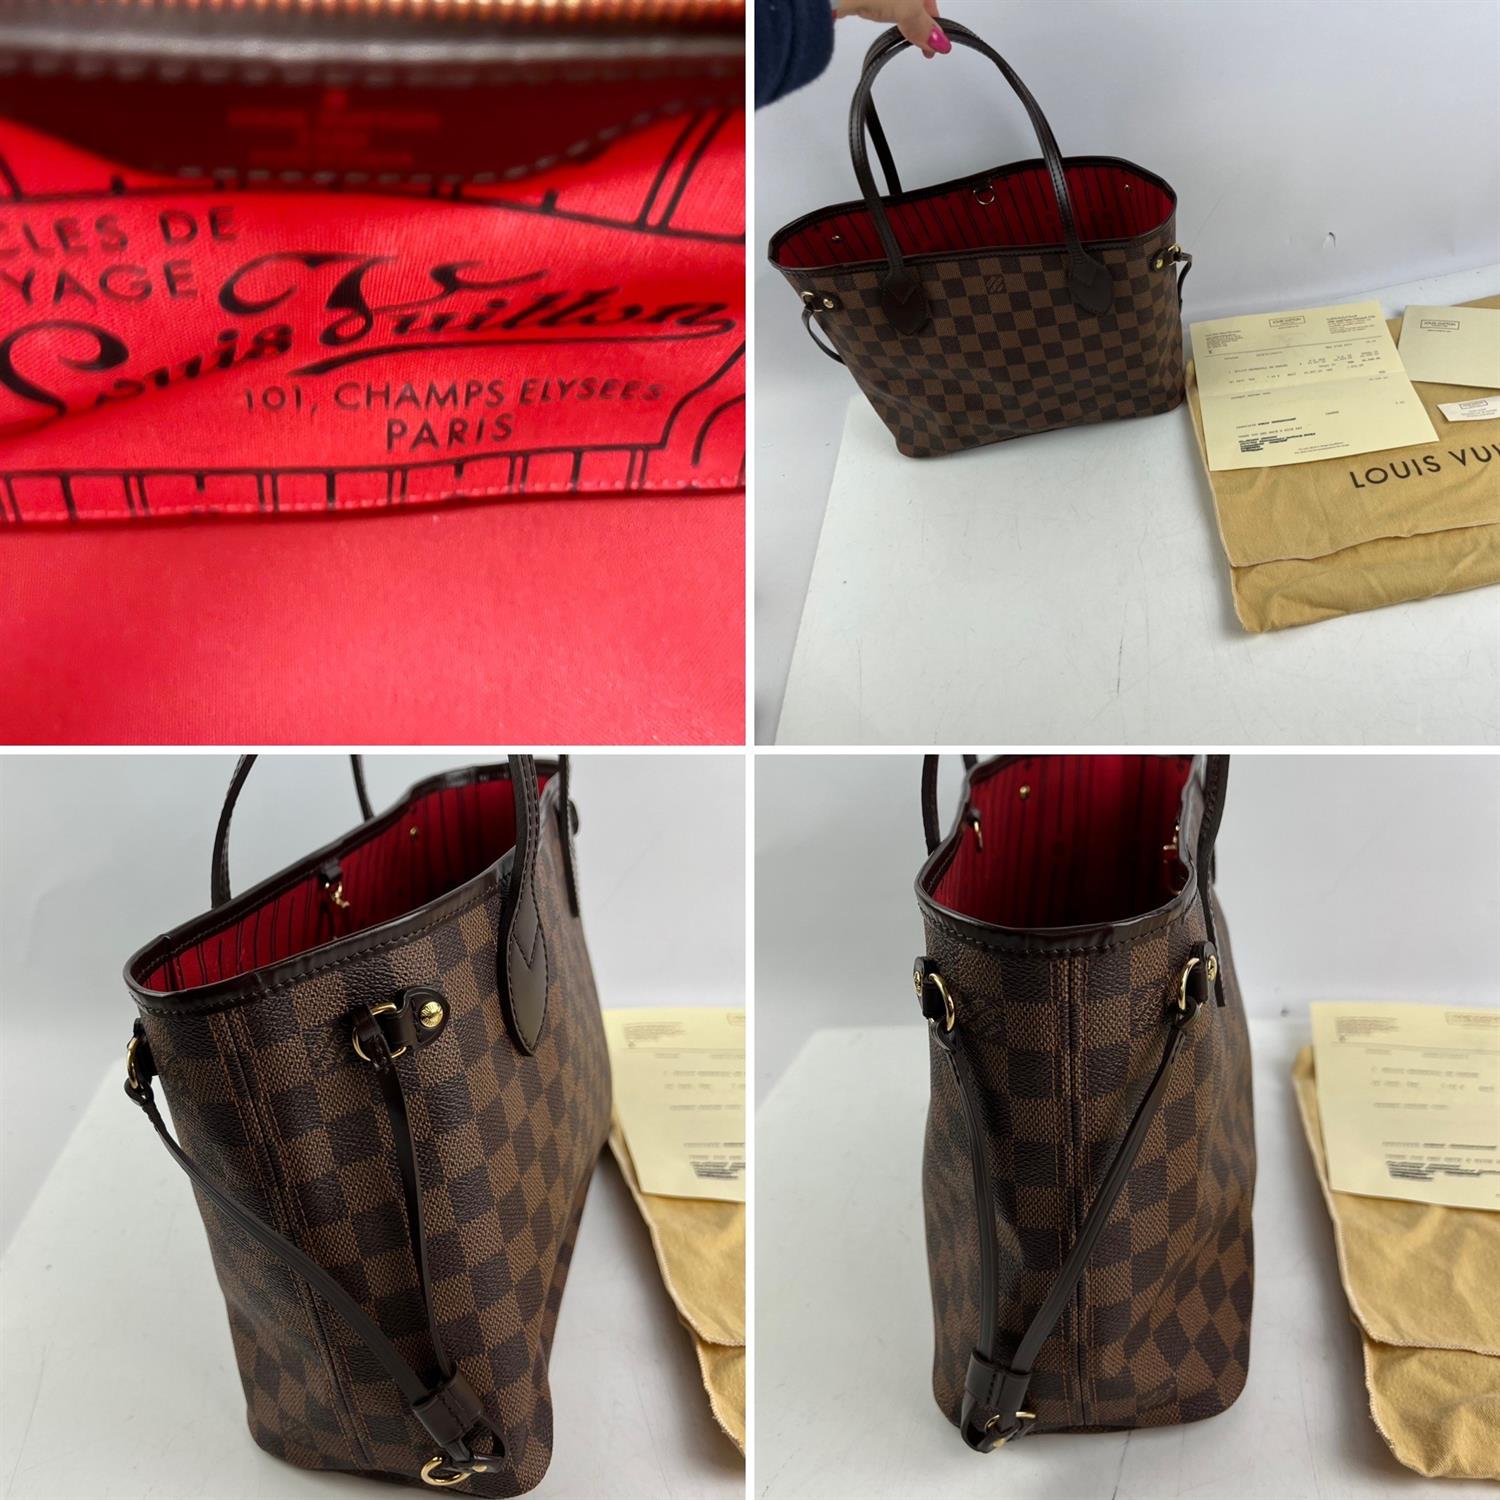 LOUIS VUITTON "NEVERFULL" N51109 Damier Ebene (Medium) tote/shoulder handbag. Coated fabric, - Image 3 of 4